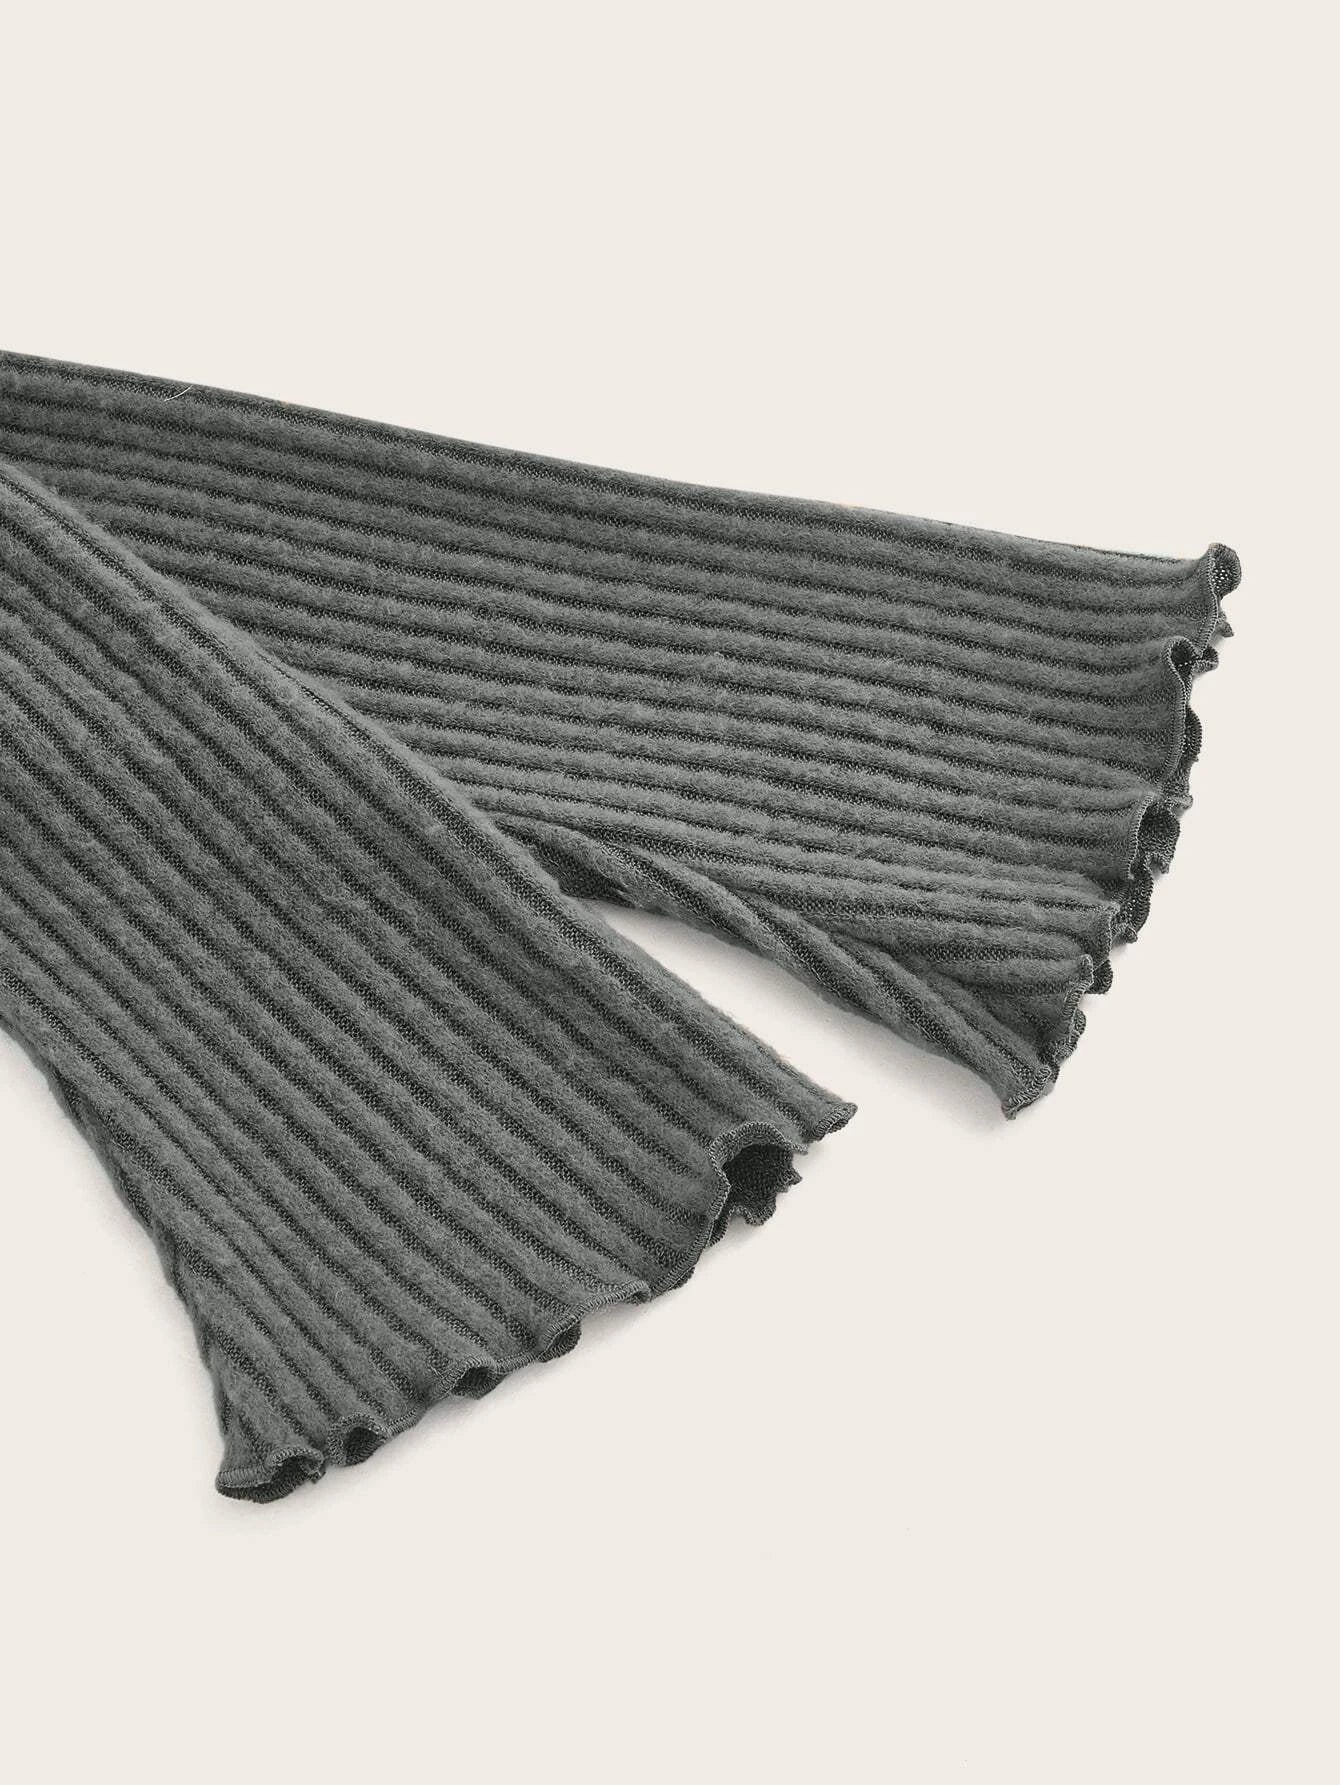 ICON Grunge Asymmetrical Neck Rib-knit Tee